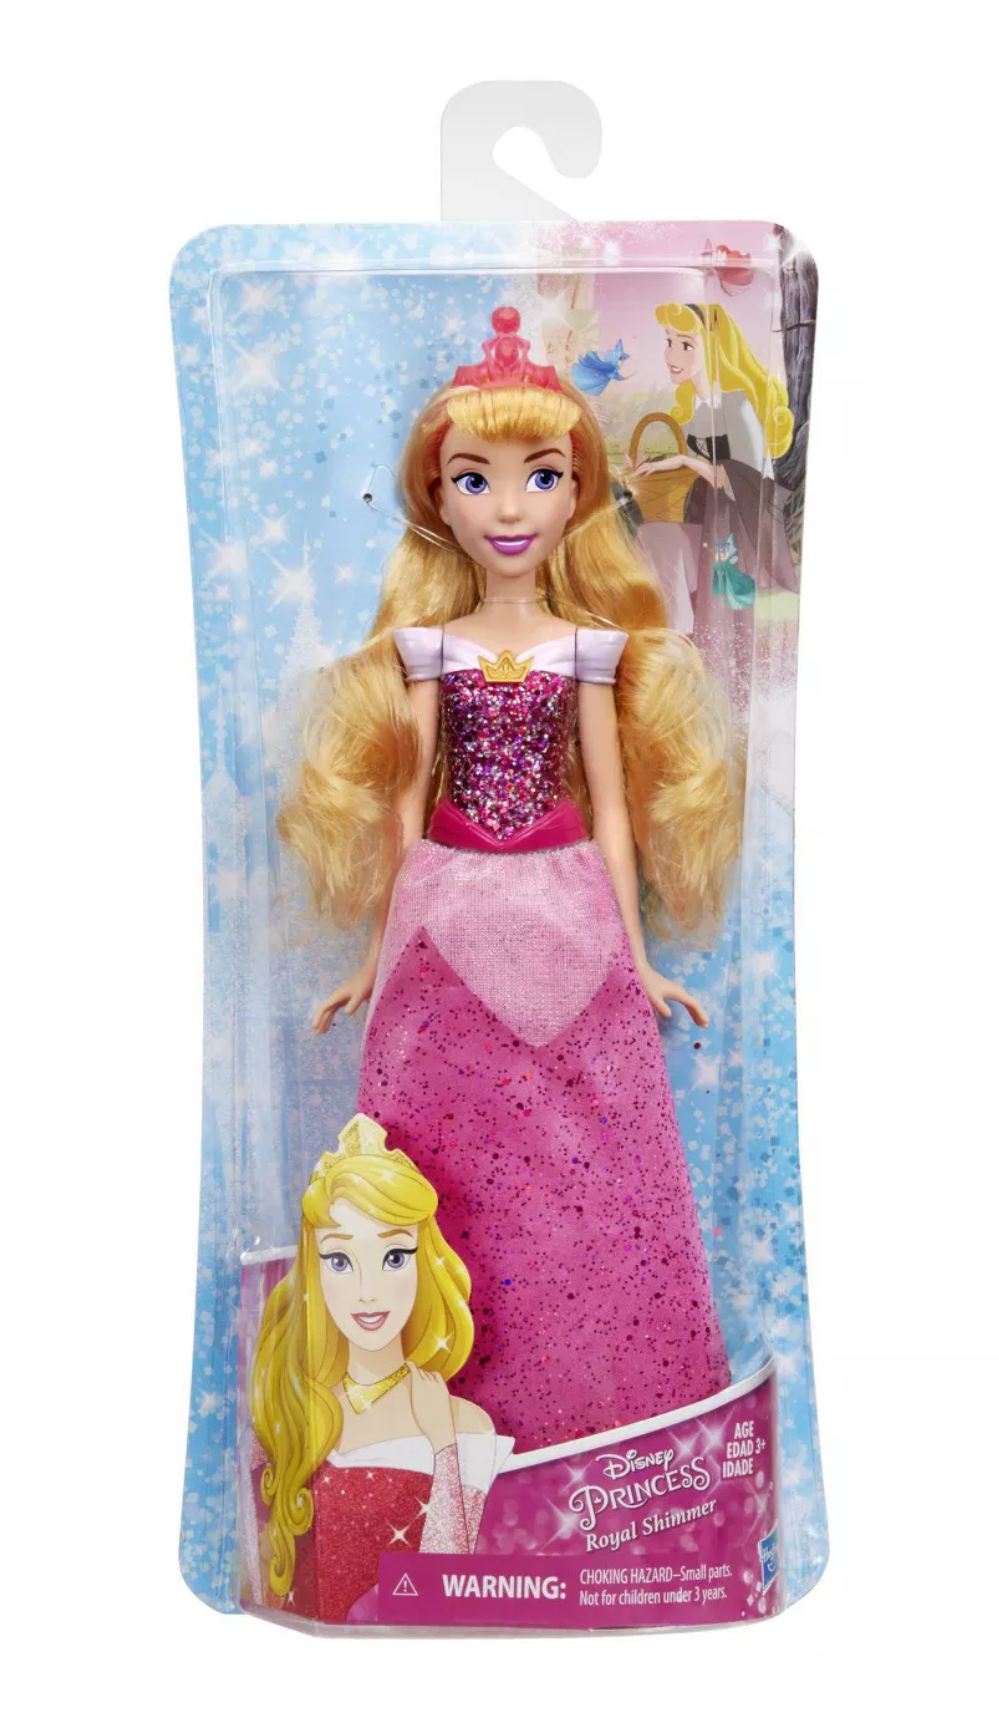 Disney Princess Small Dolls (Moana, Tiana, Ariel, Cinderella, Pocahontas,  Merida, Belle, Rapunzel, Jasmine, Mulan, Snow White or aurora) Assortment  Children Toys, Gift for Girls ages 3 years and above